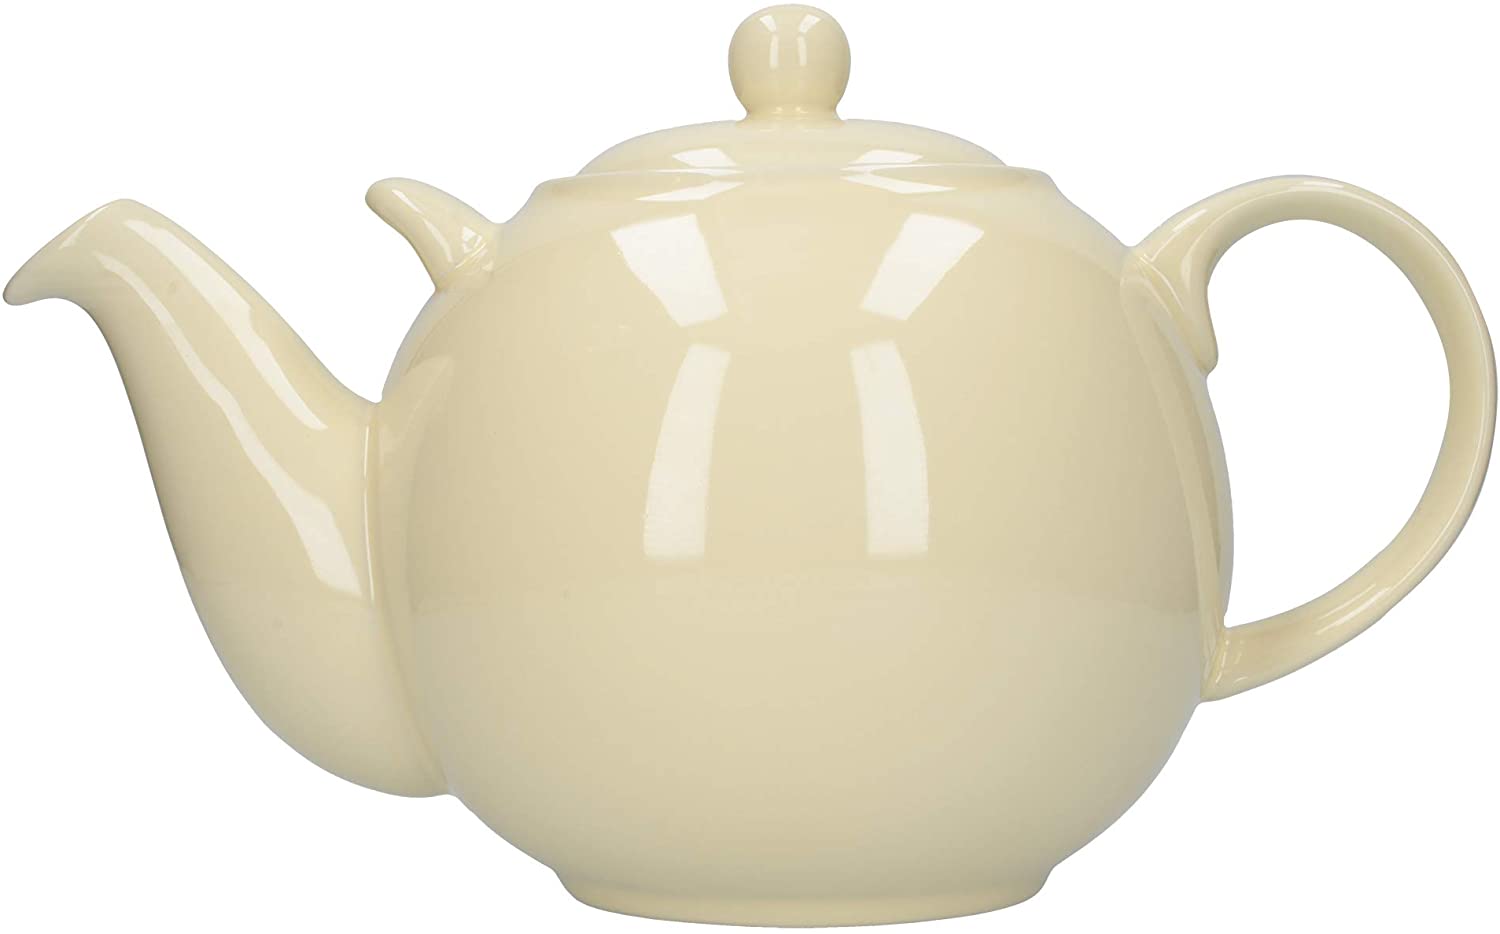 London Pottery Co 10 Cup Globe Teapot Ivory